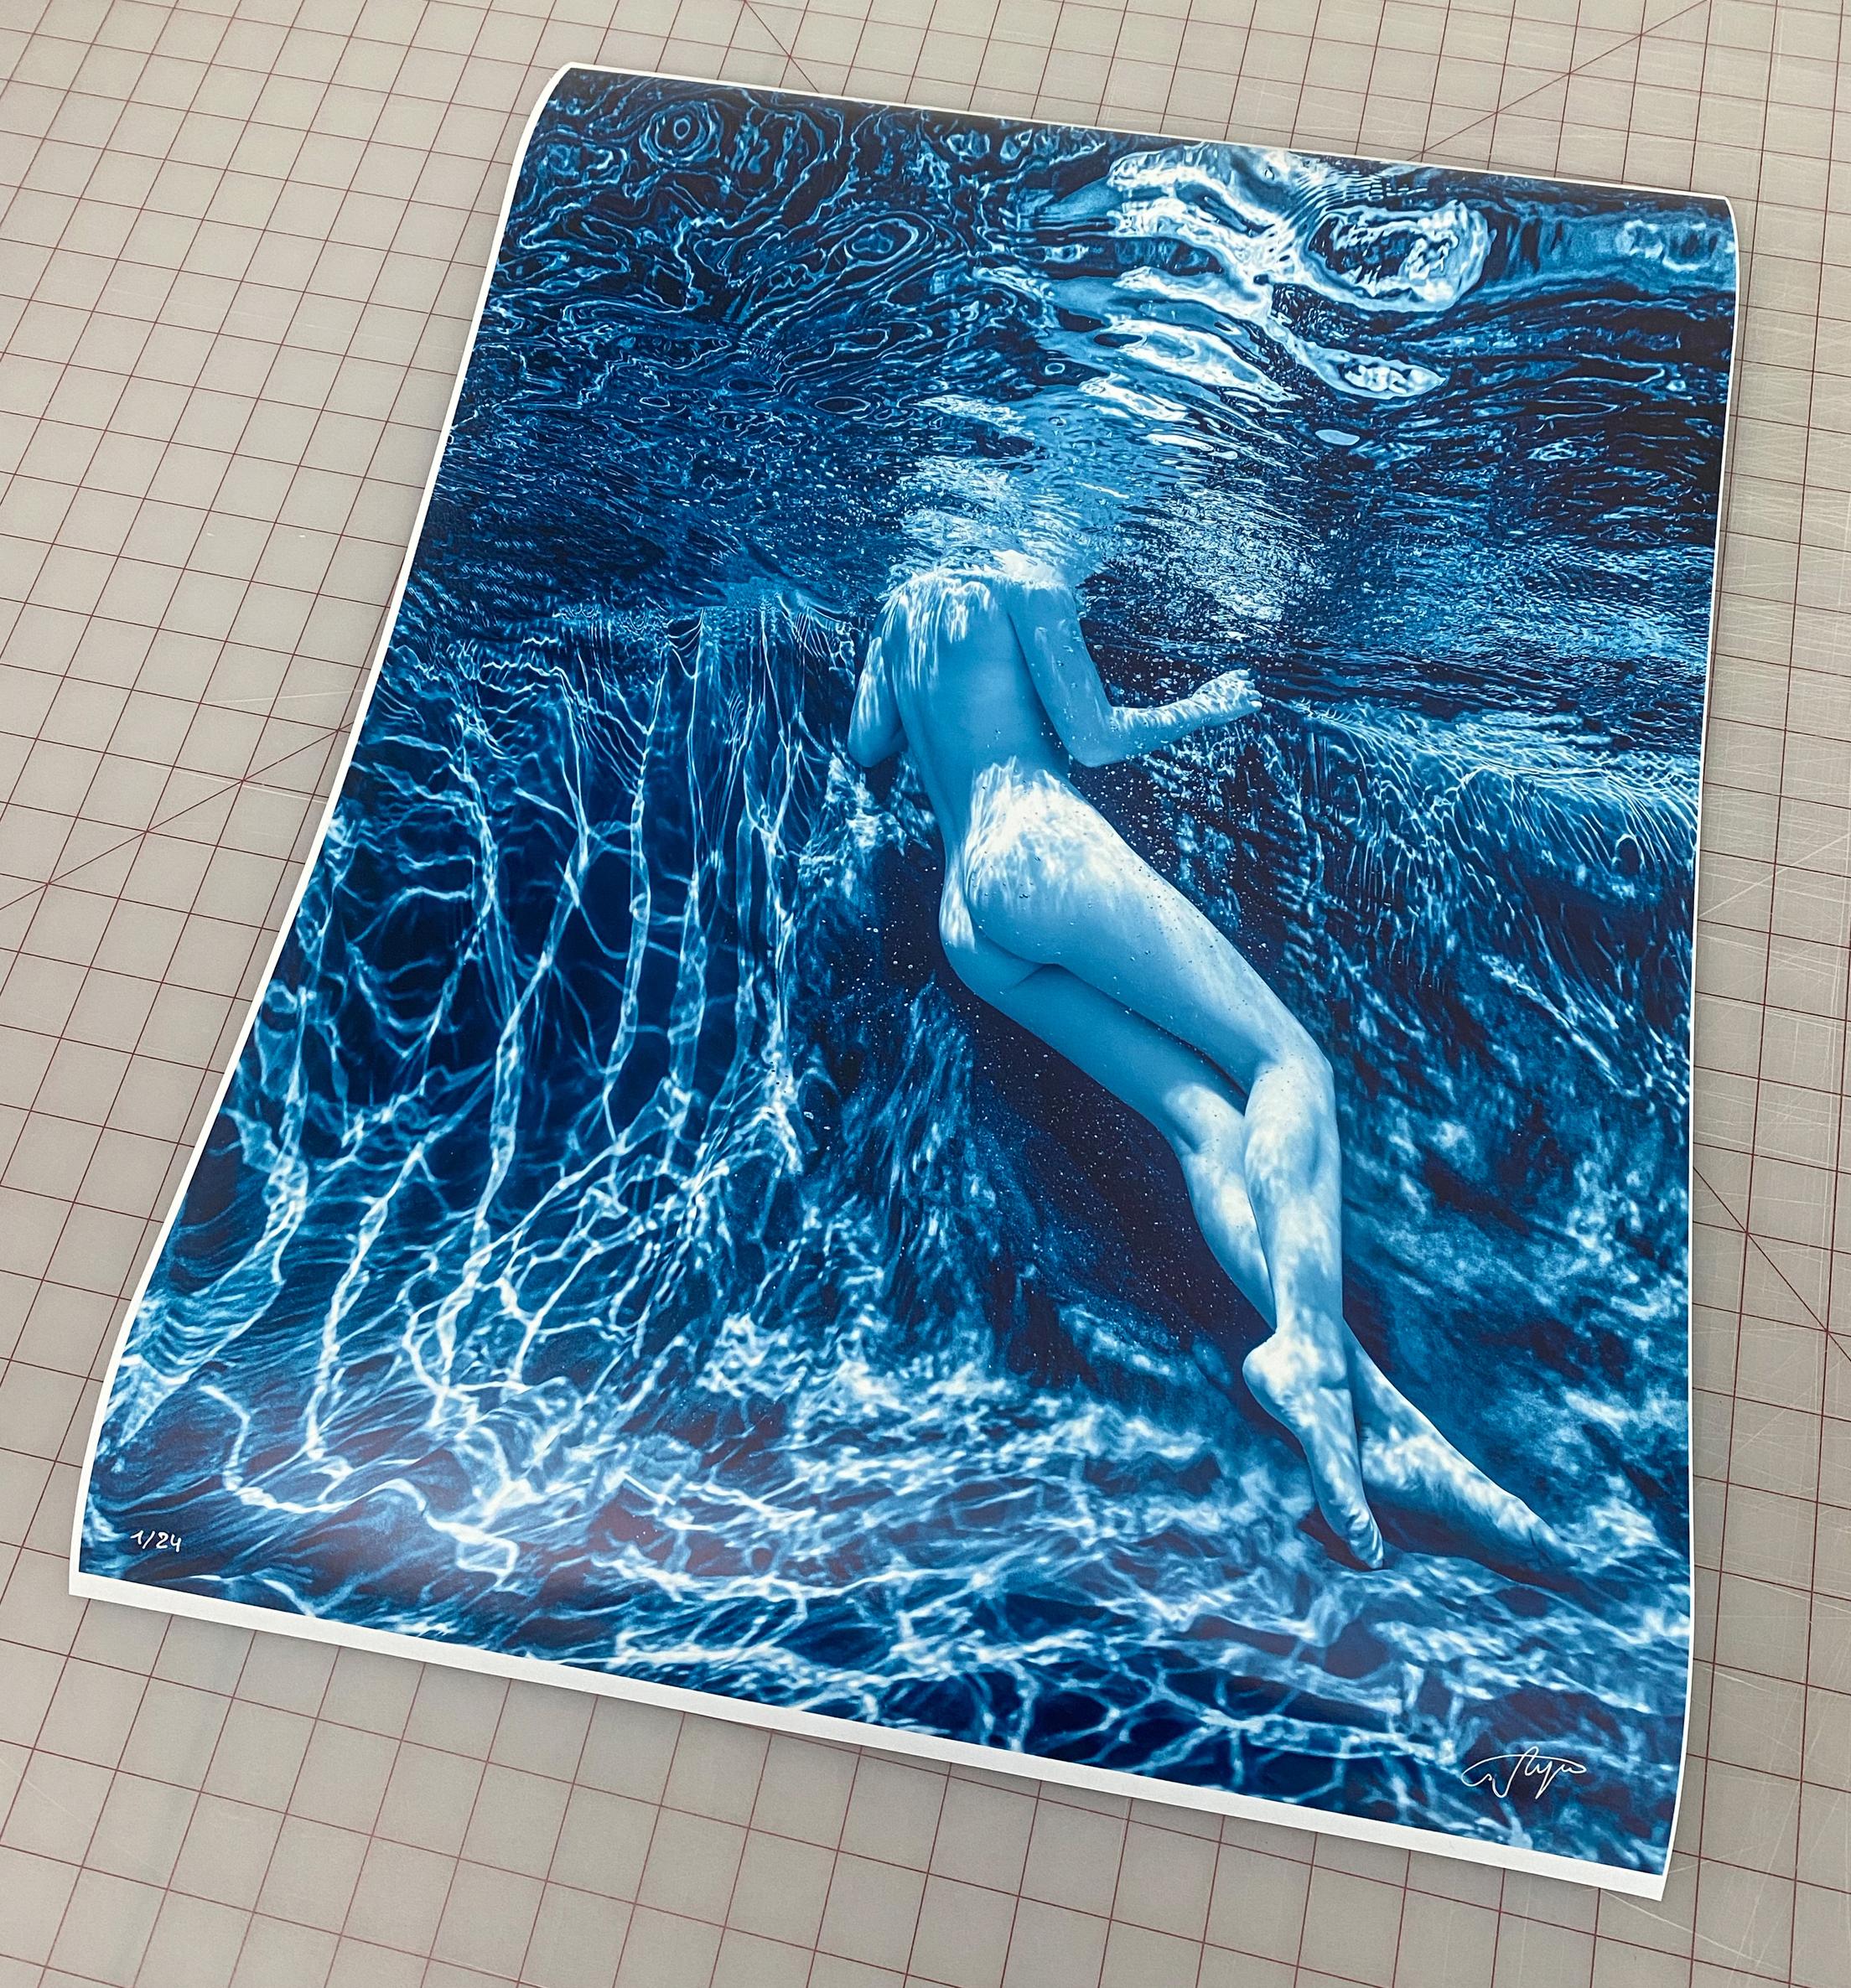 Moonlight IV - underwater nude photograph - archival pigment print 24x18